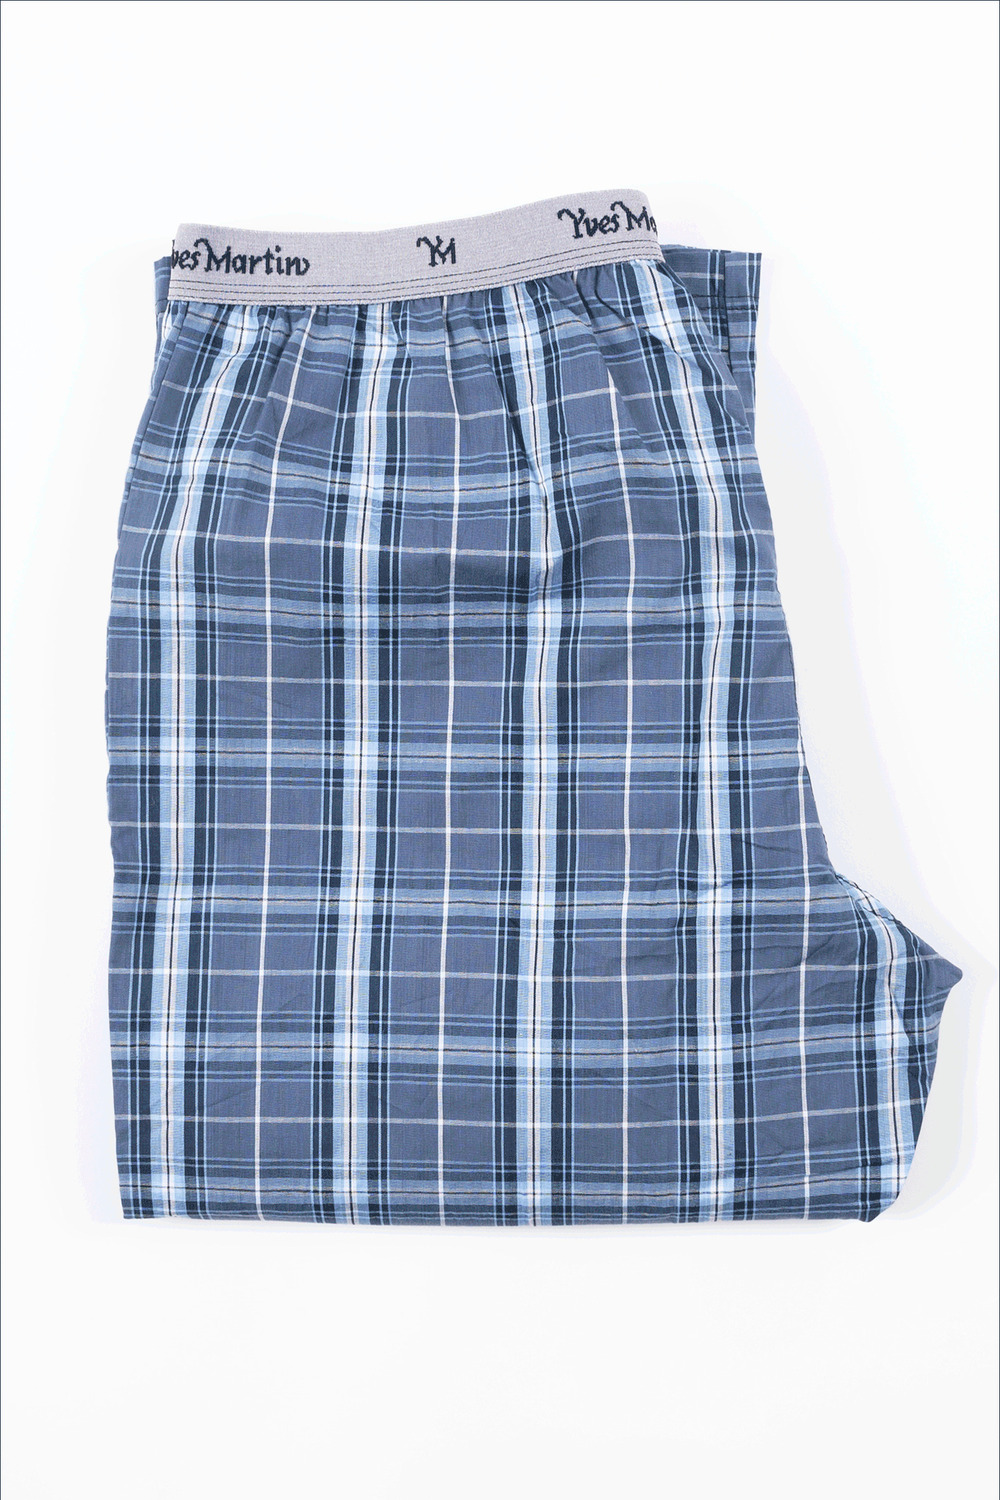 Yves Martin - Flannel sleep pants, blue plaid - Plus Size. Colour